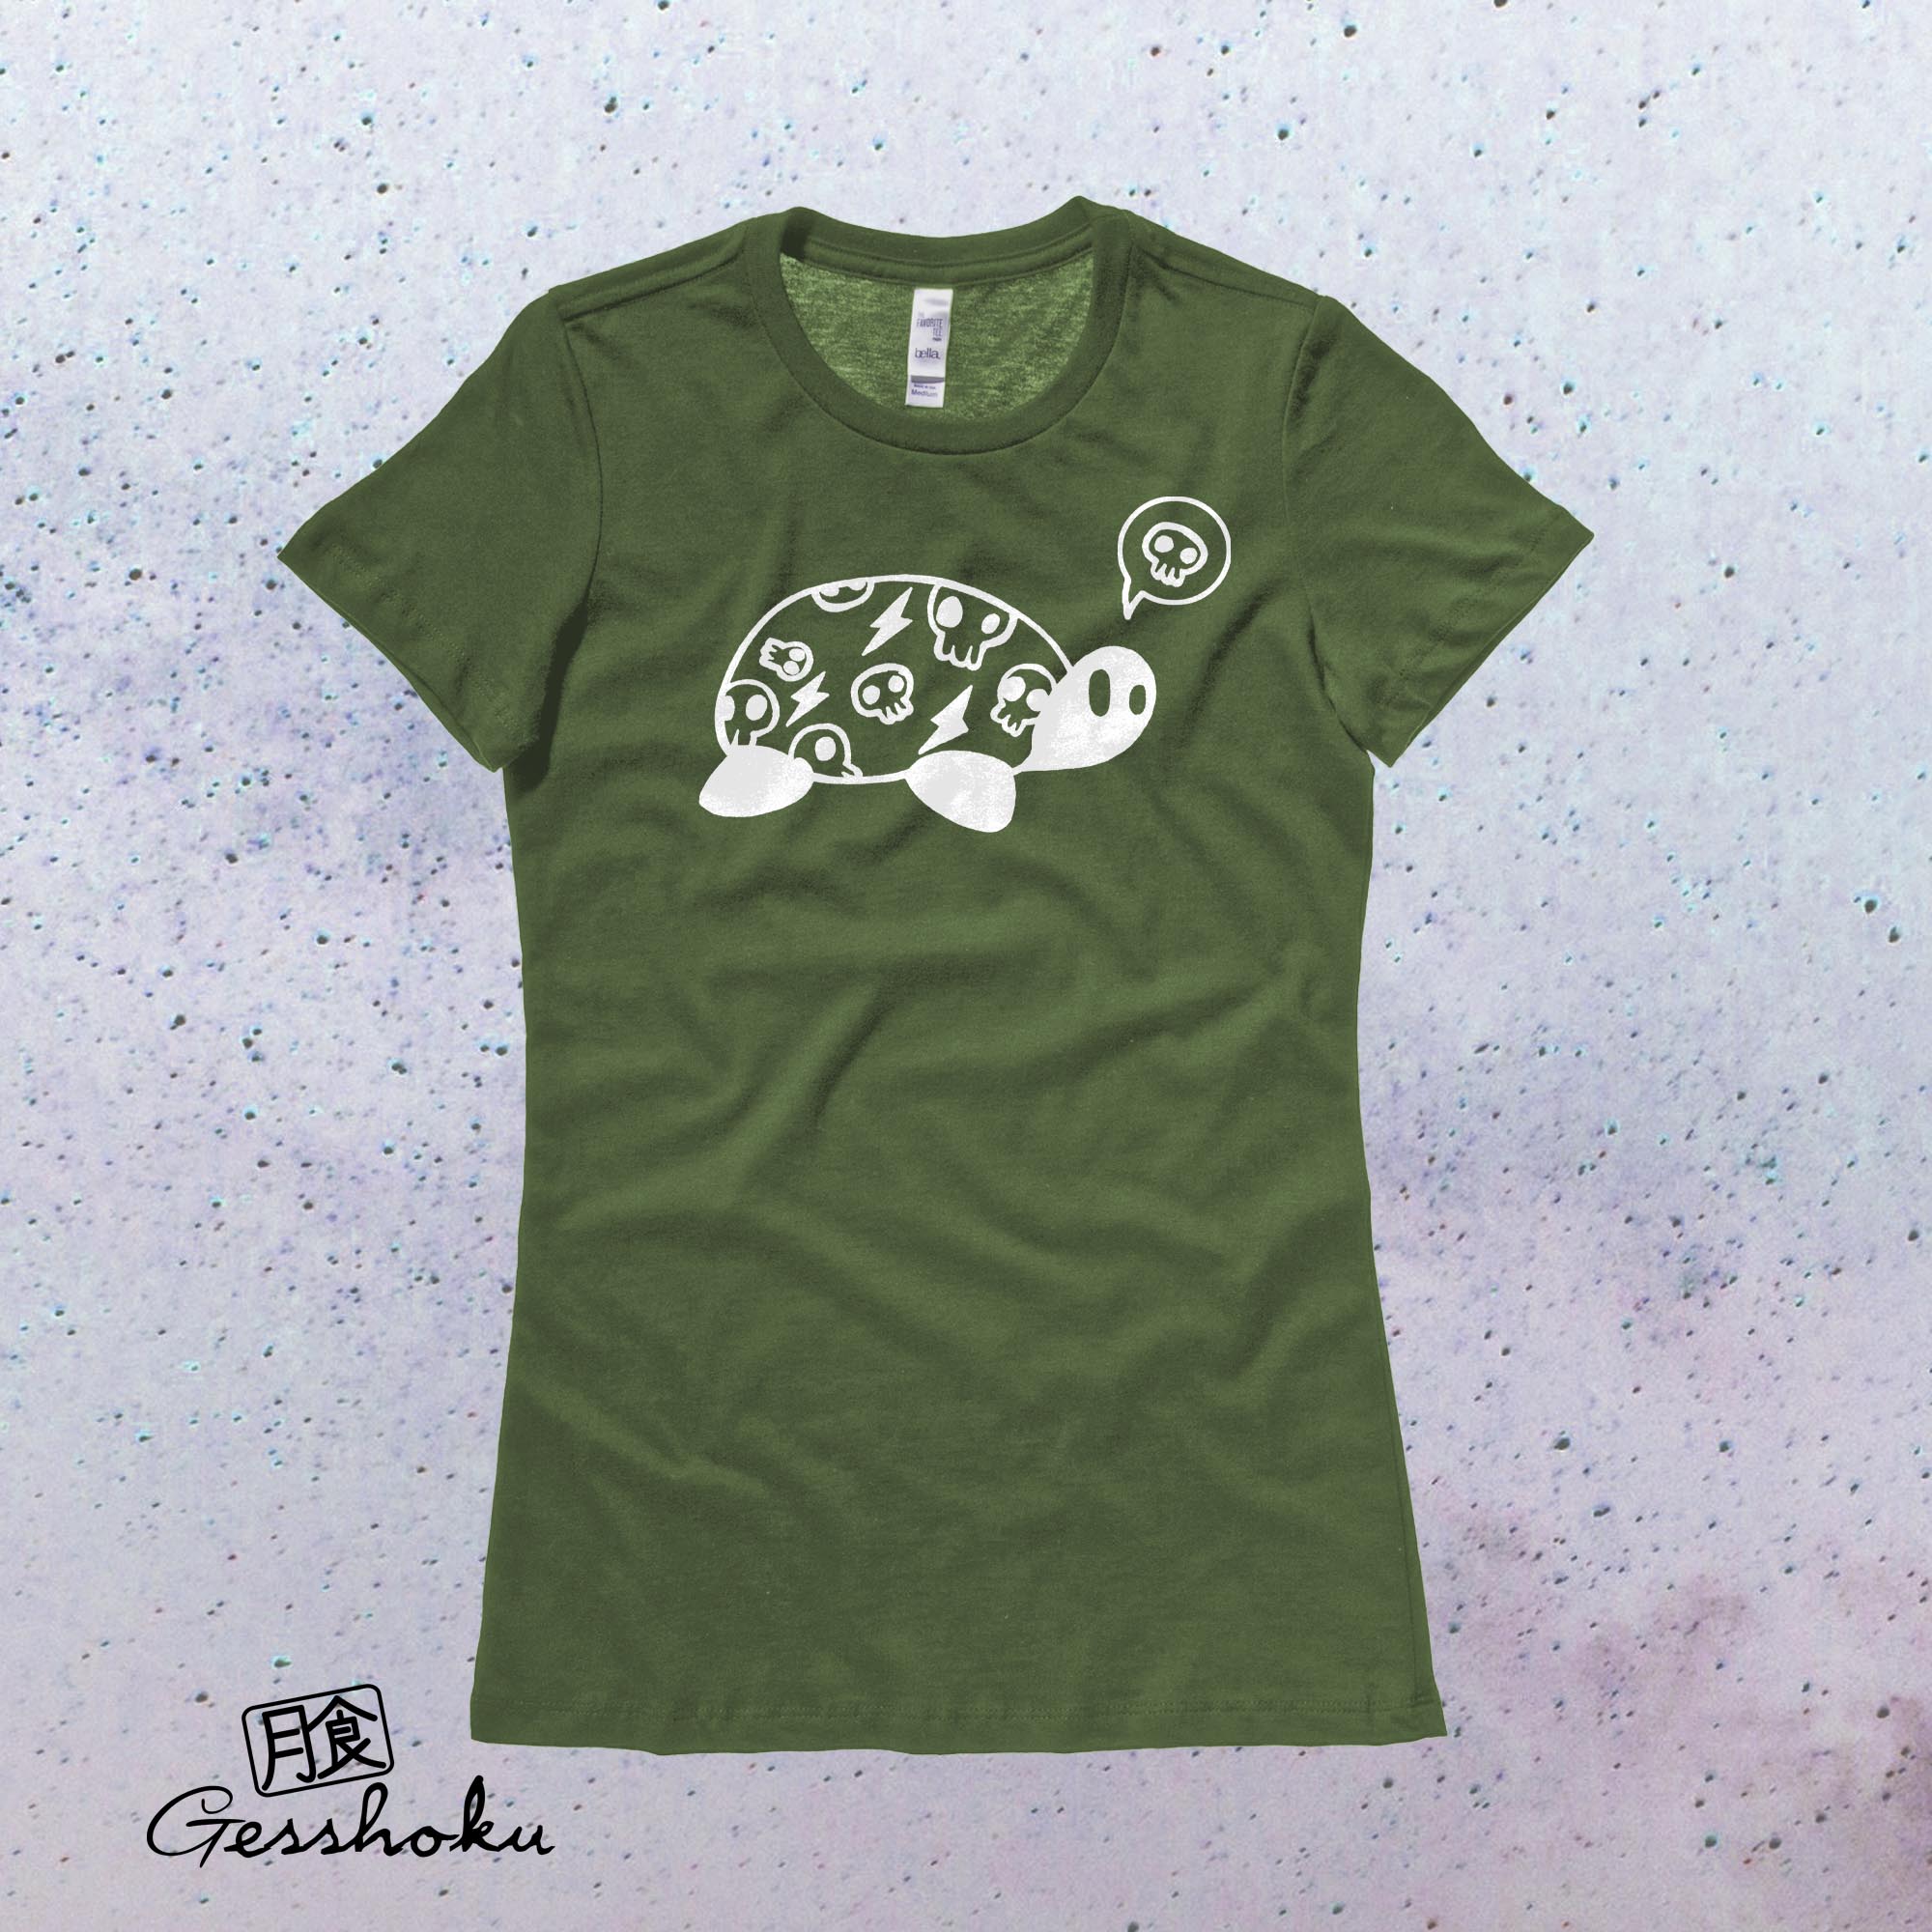 Harajuku Kame Turtle Ladies T-shirt - Olive Green